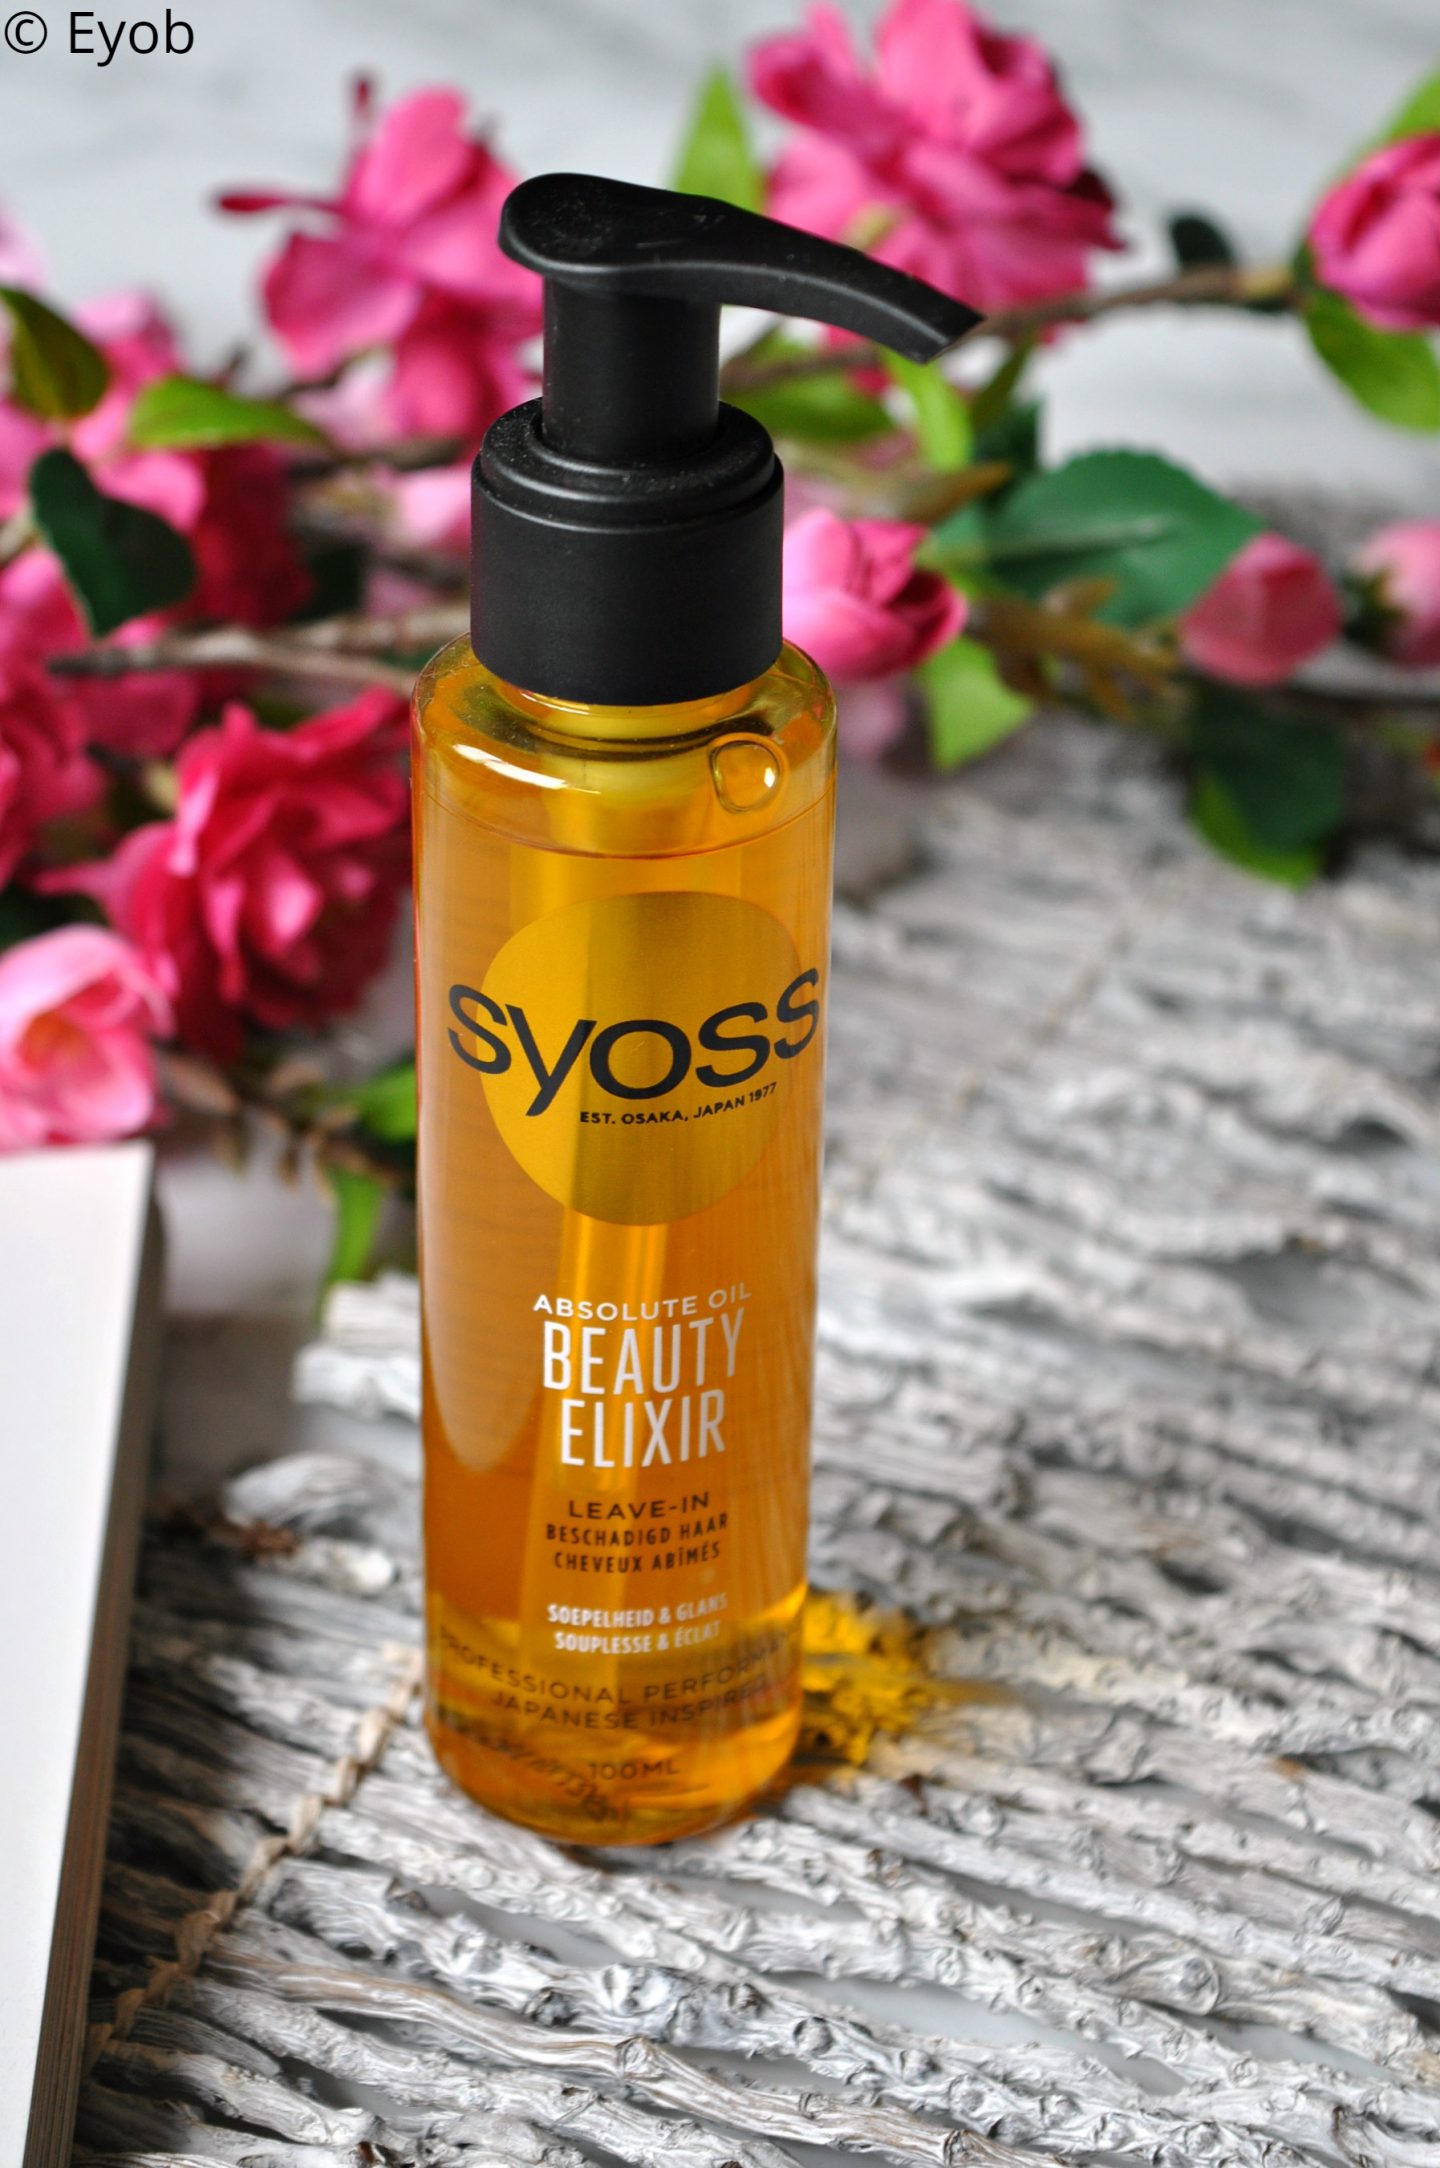 Syoss Beauty Elixer Absolute Oil